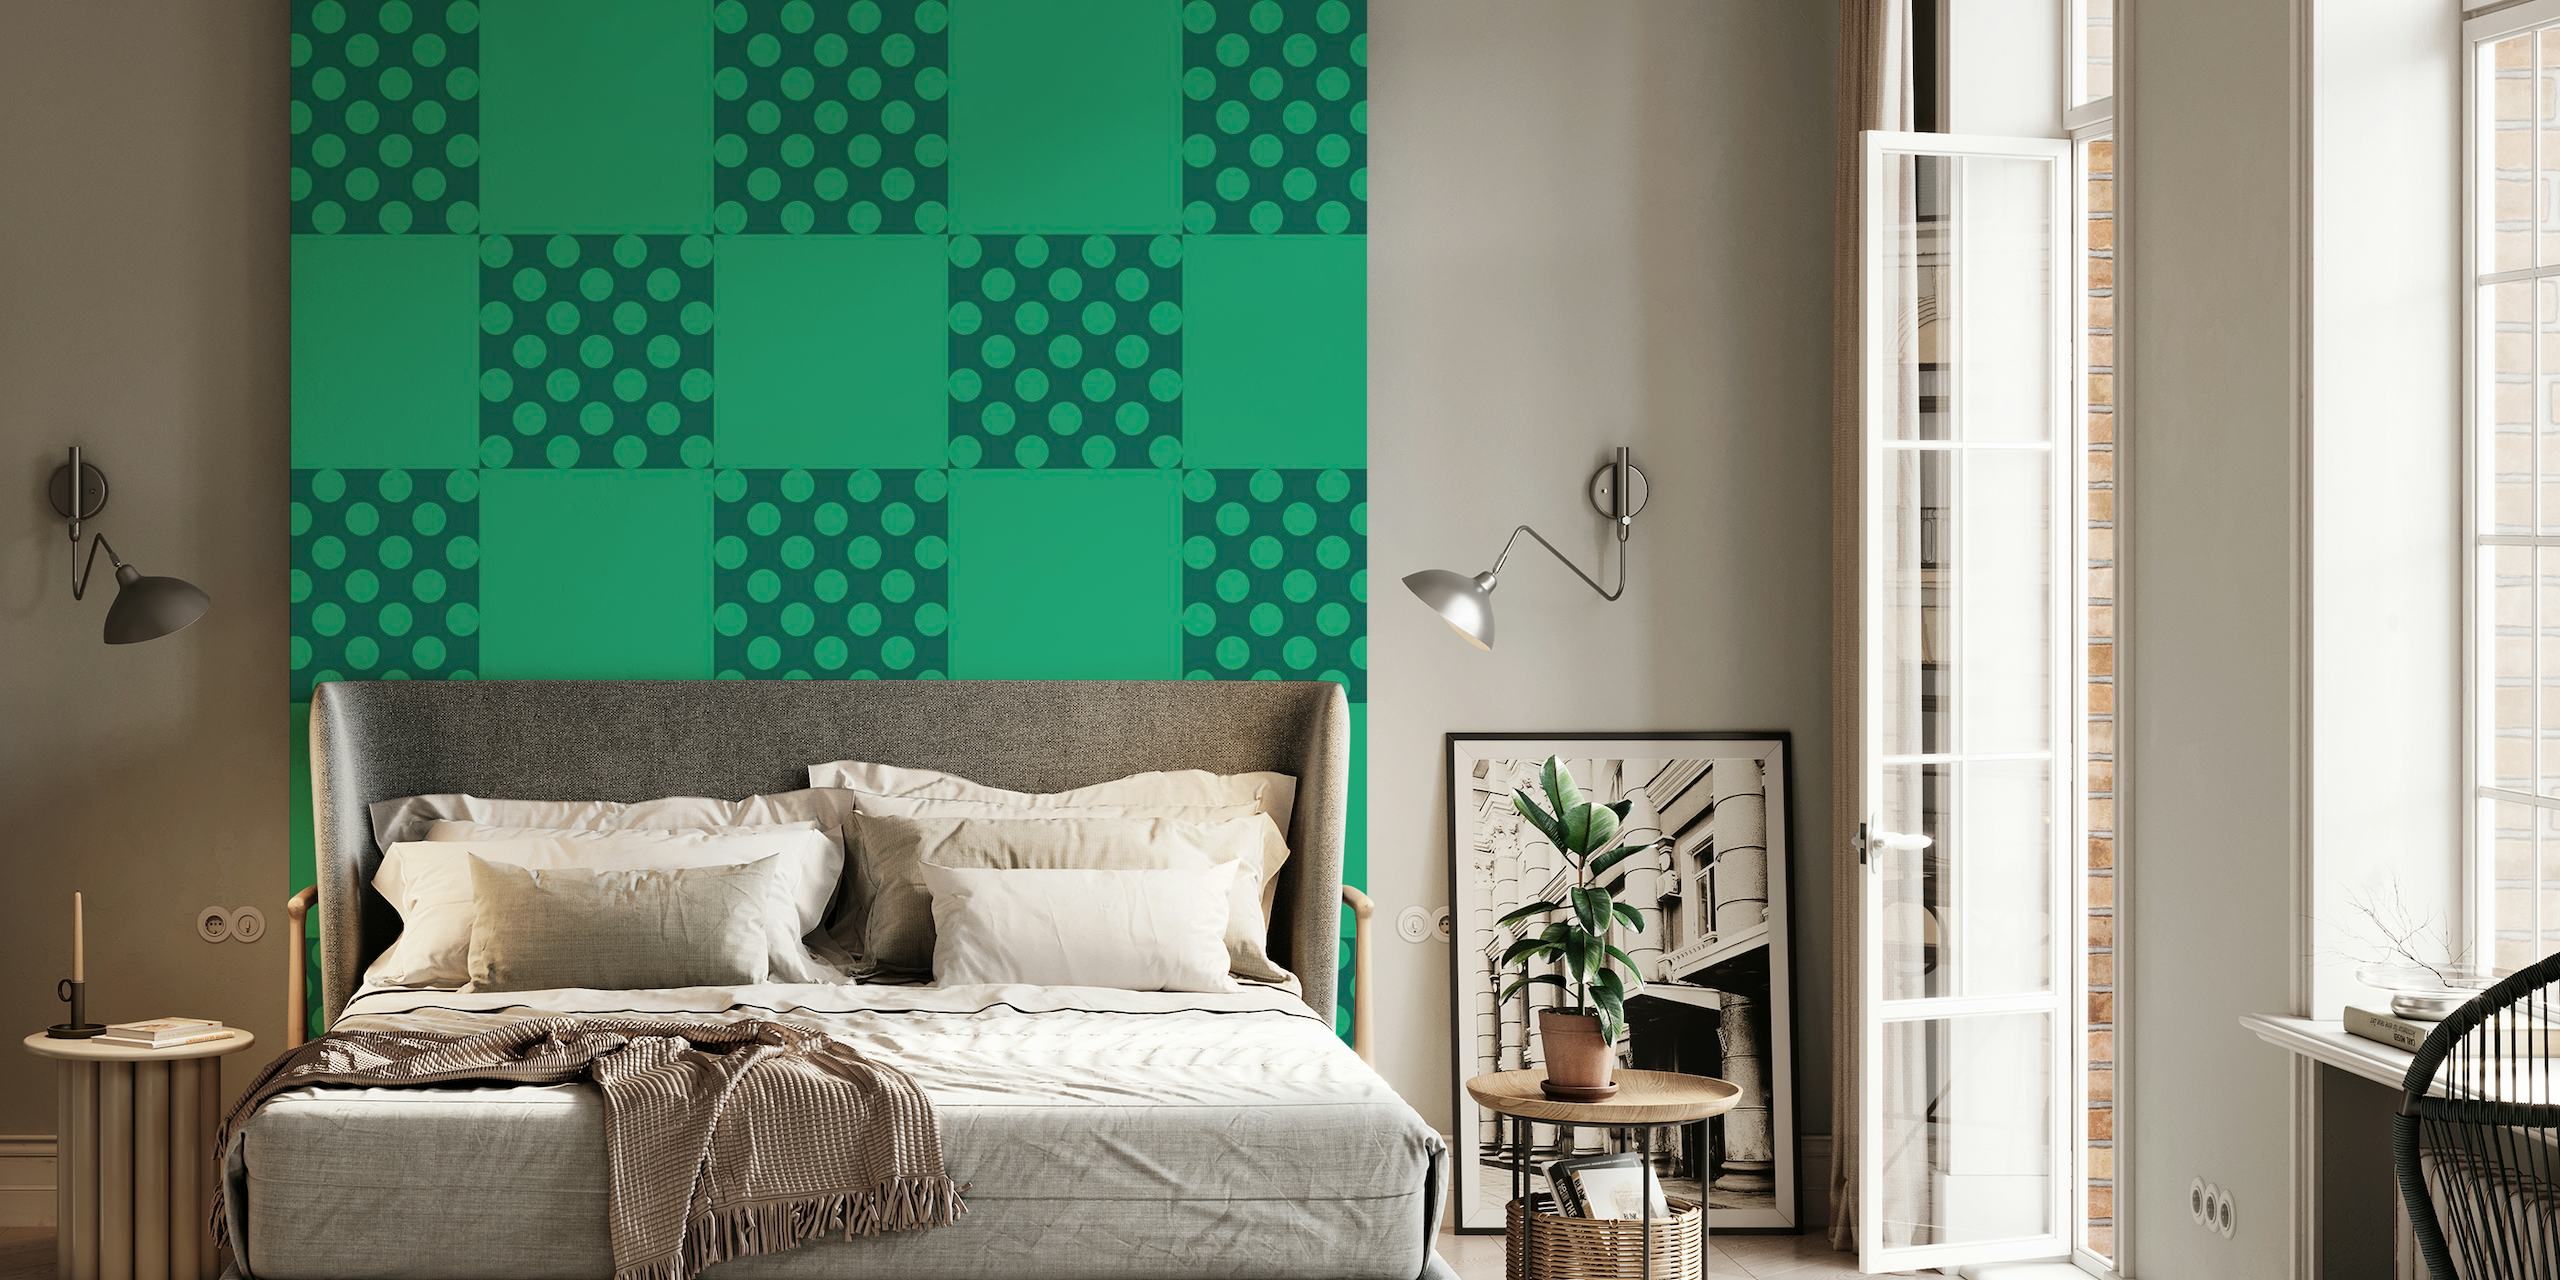 Green Abstract Square and Polka Dots Pattern Wall Mural